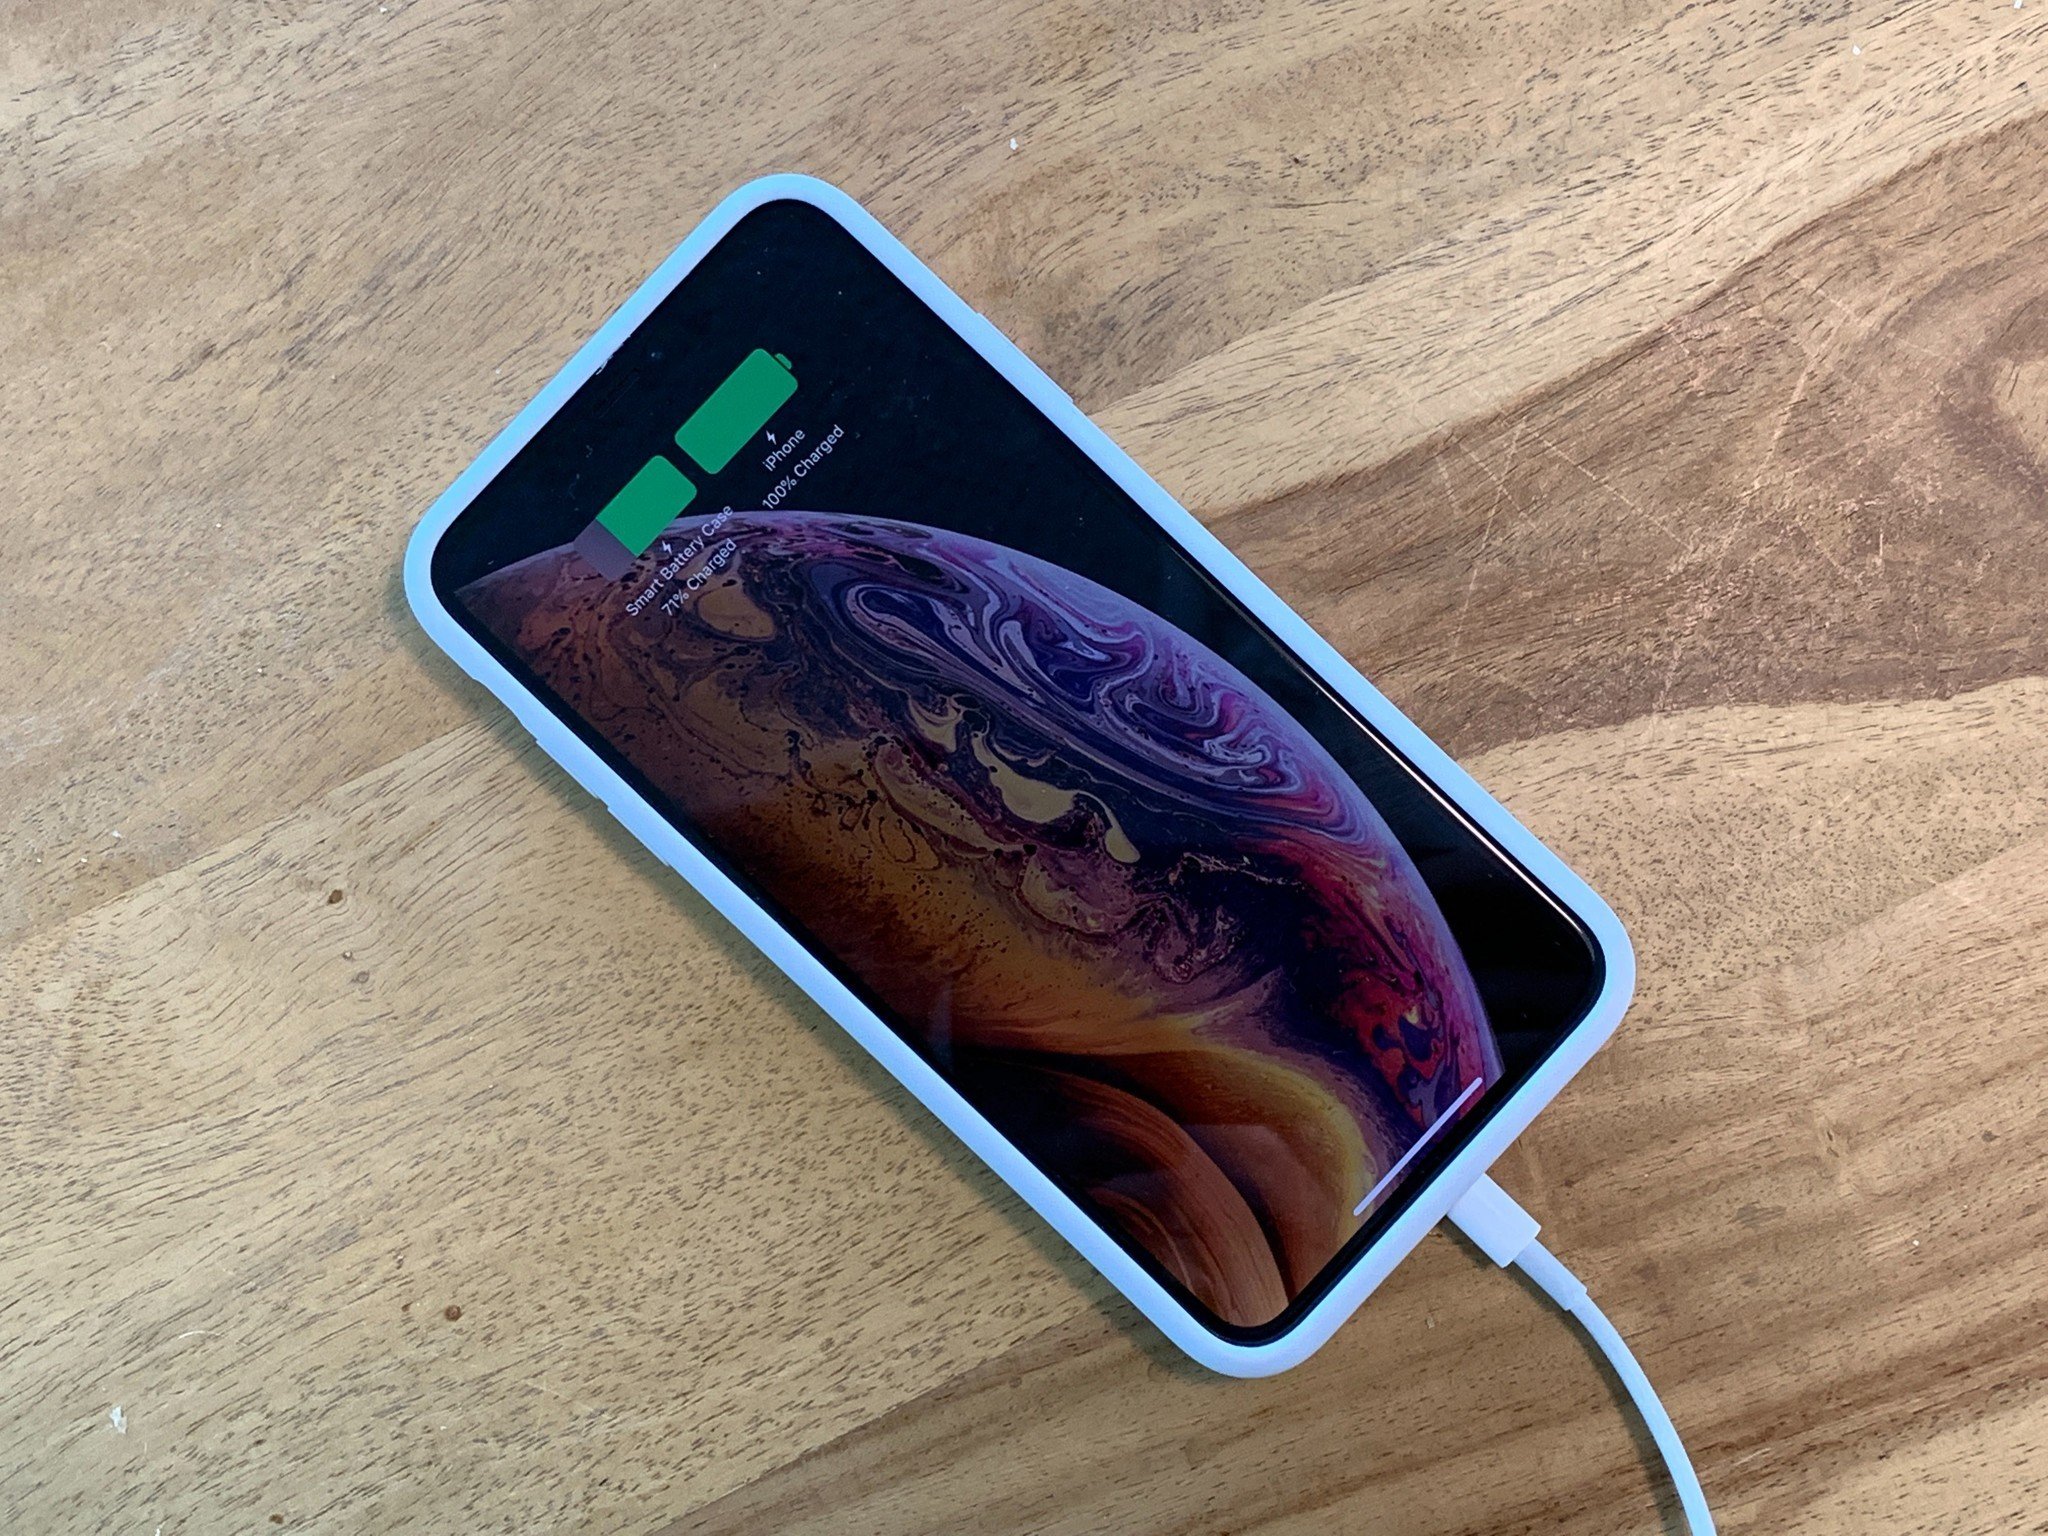 Apple iPhone charging